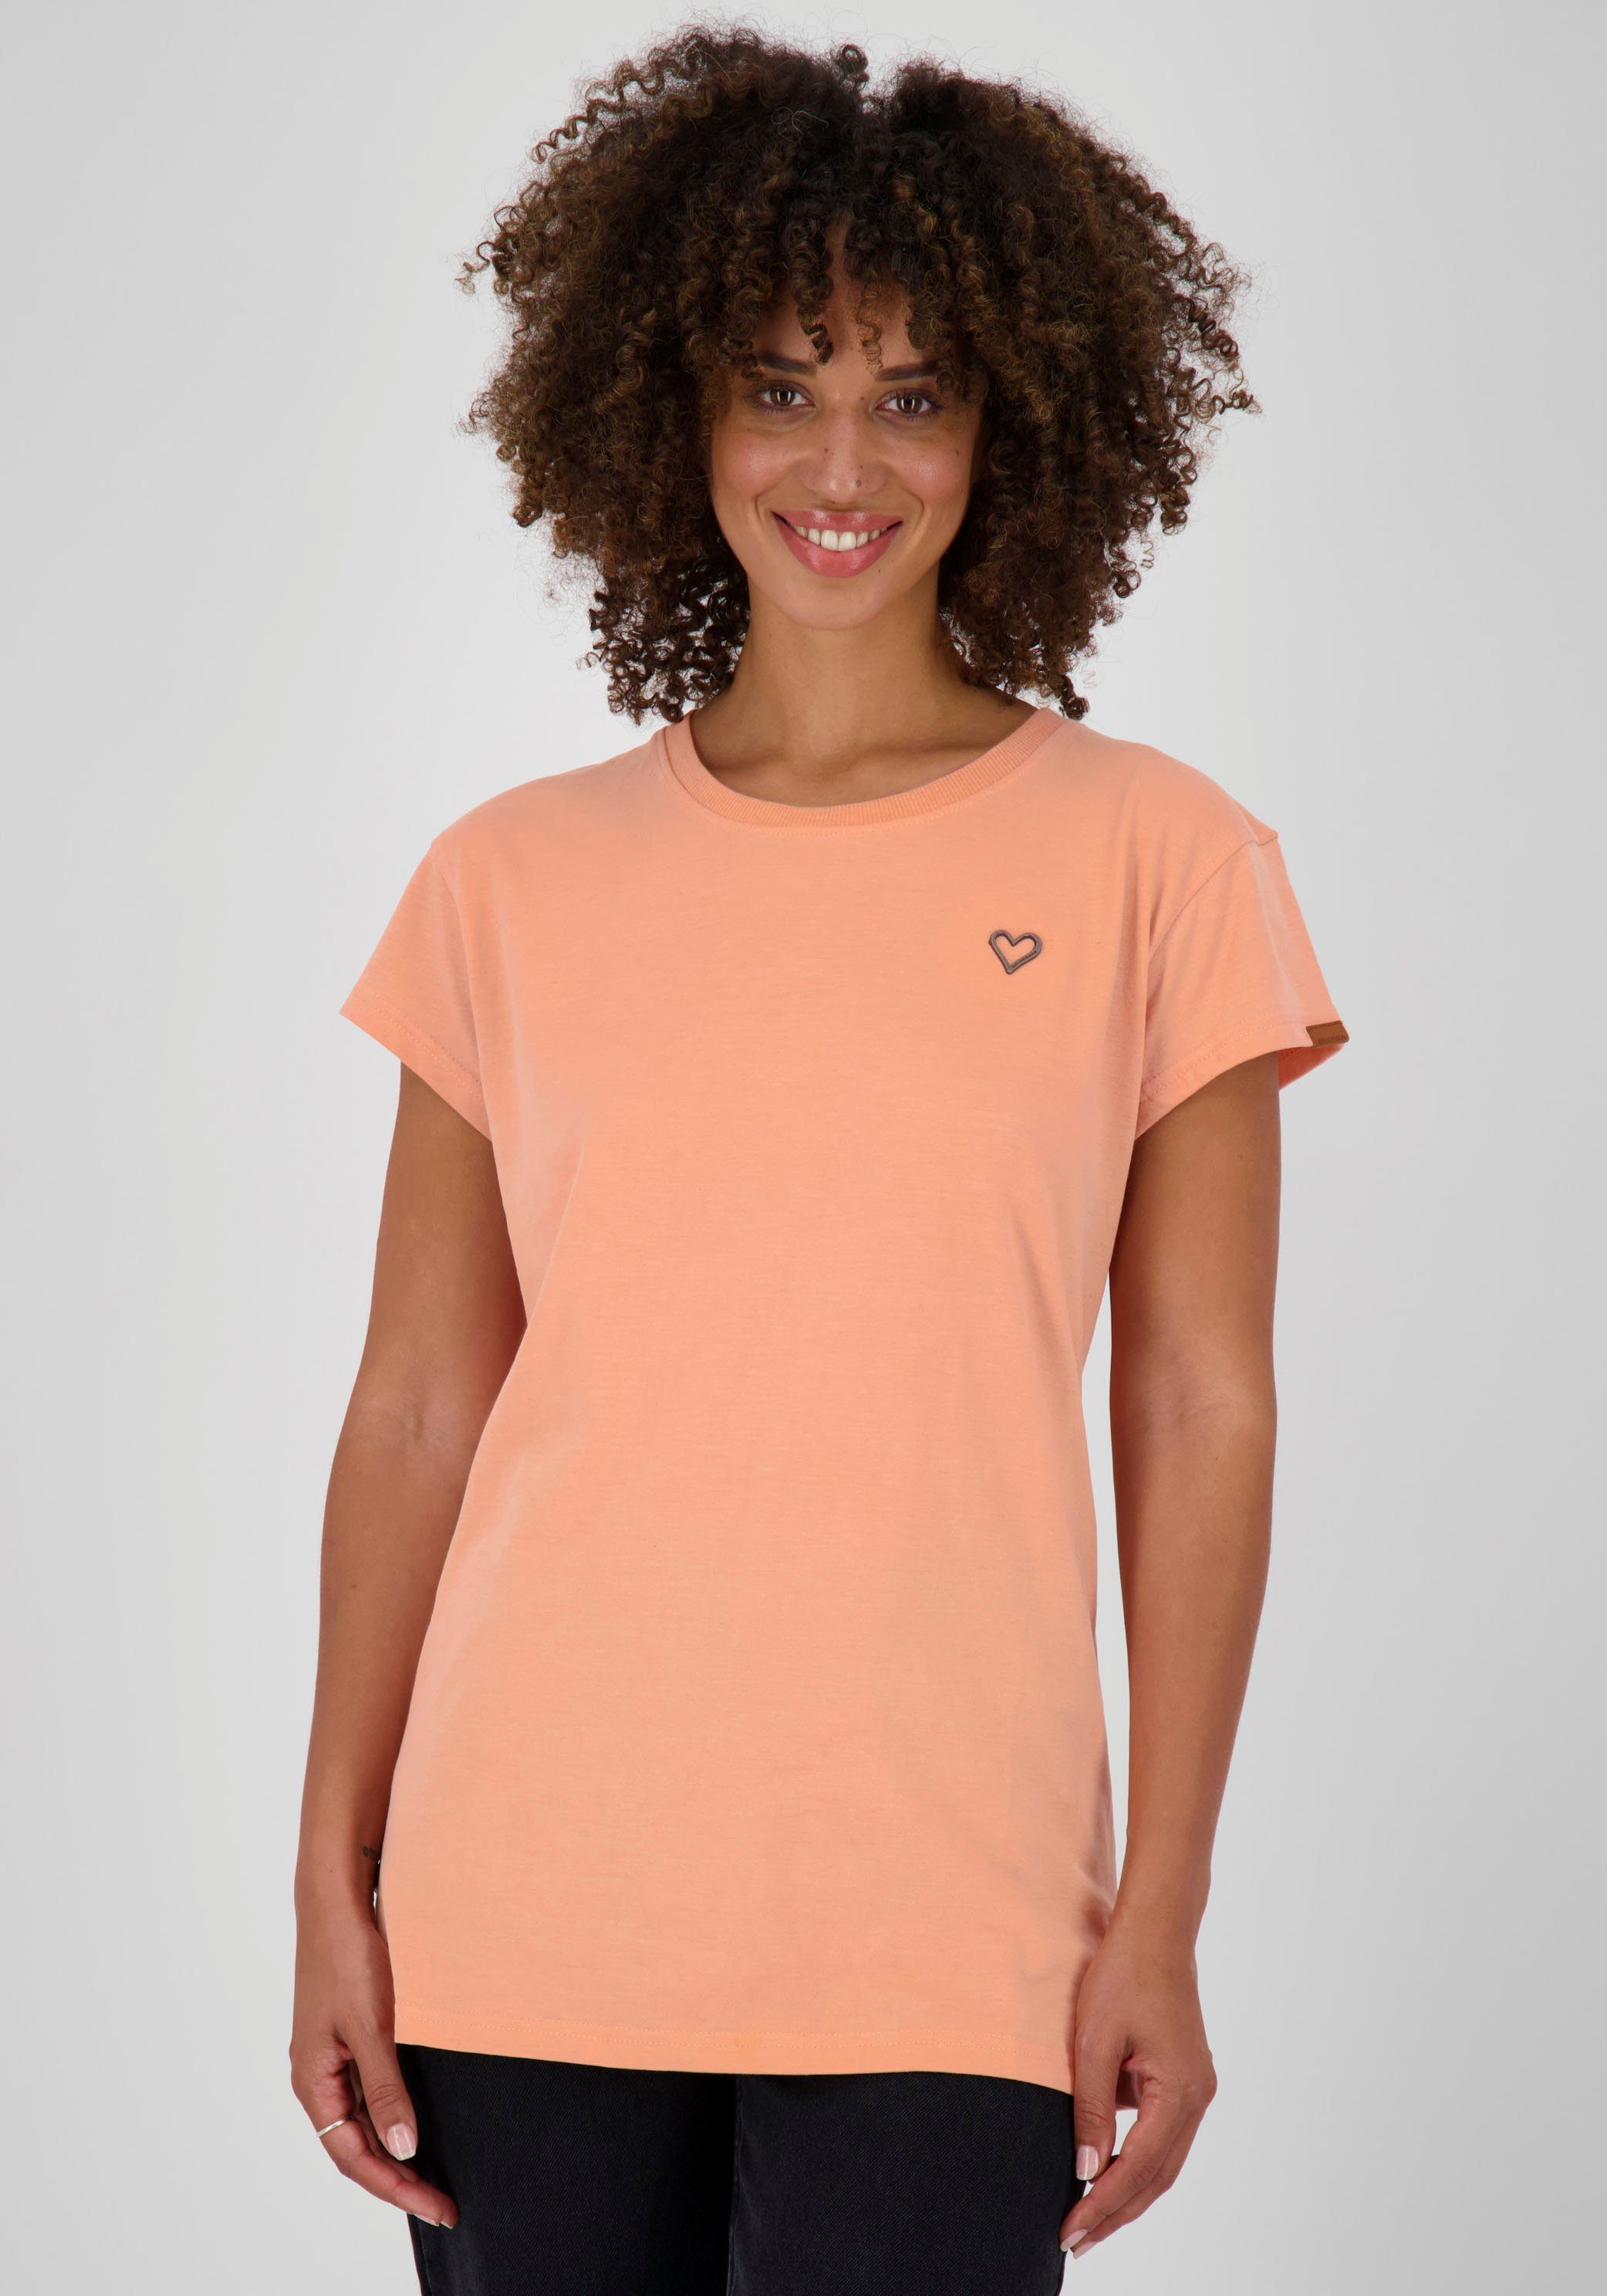 Alife & Kickin T-Shirt MaxiAK peach sportives Longshirt schönen in Uni-Farben A